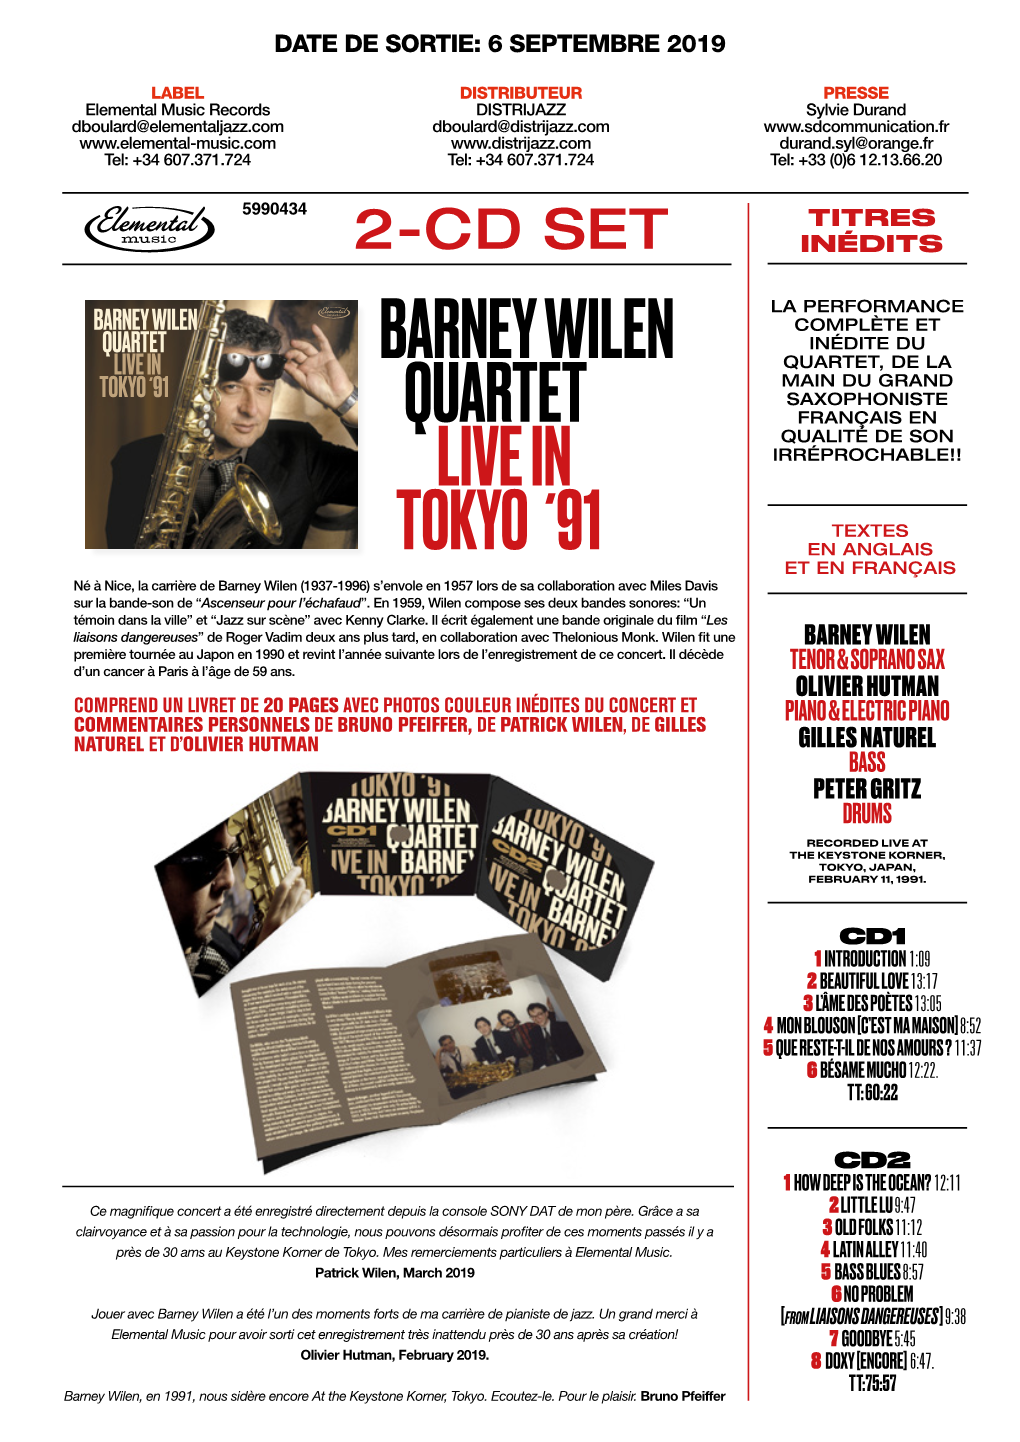 Barney Wilen Quartet Live in Tokyo